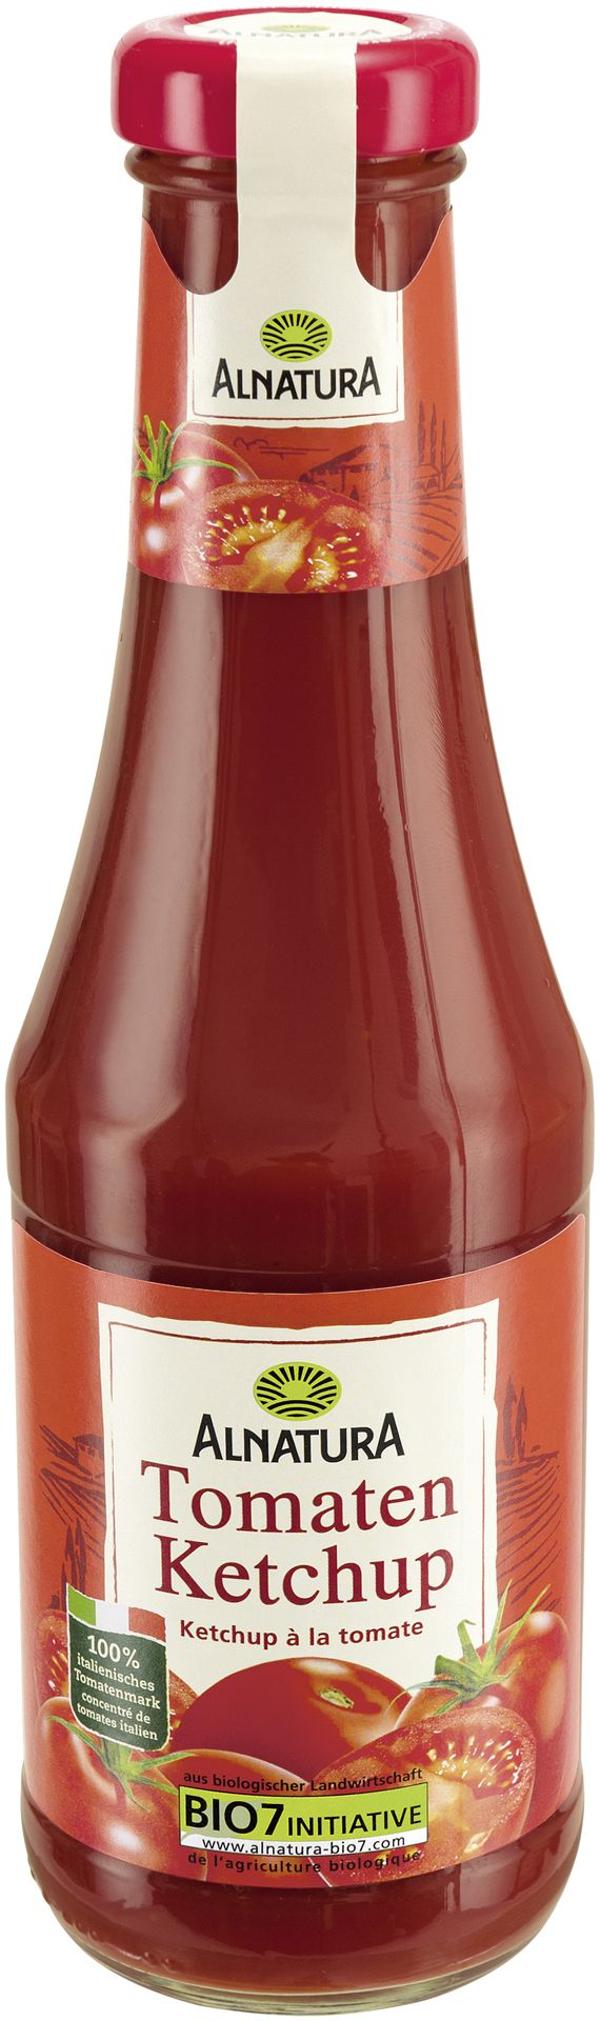 Produktfoto zu Tomaten Ketchup 500 ml Alnatura